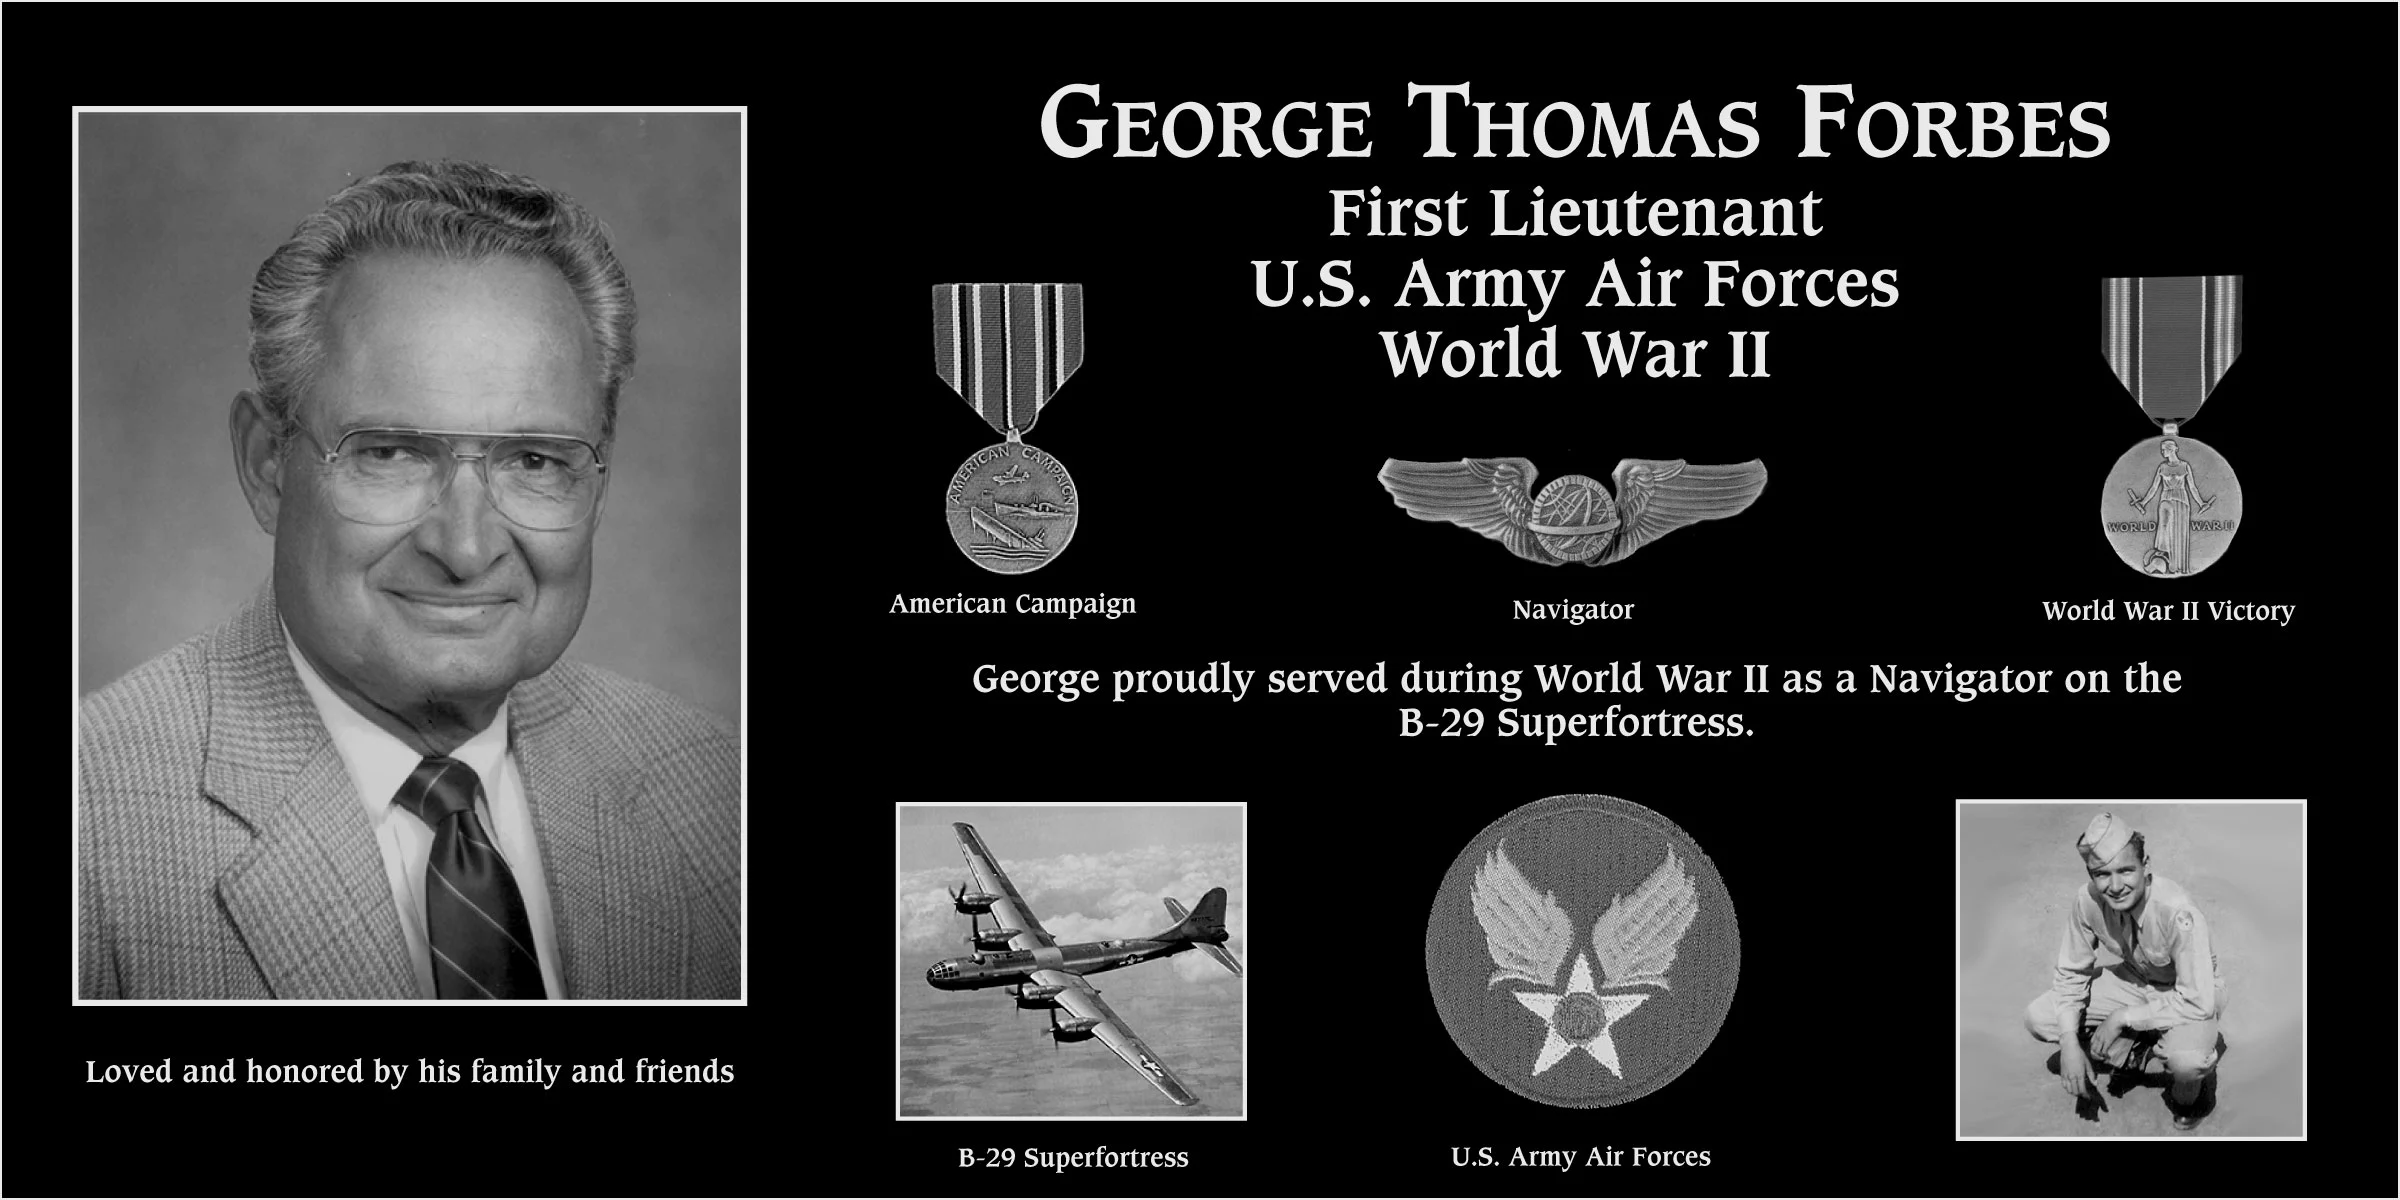 George Thomas Forbes